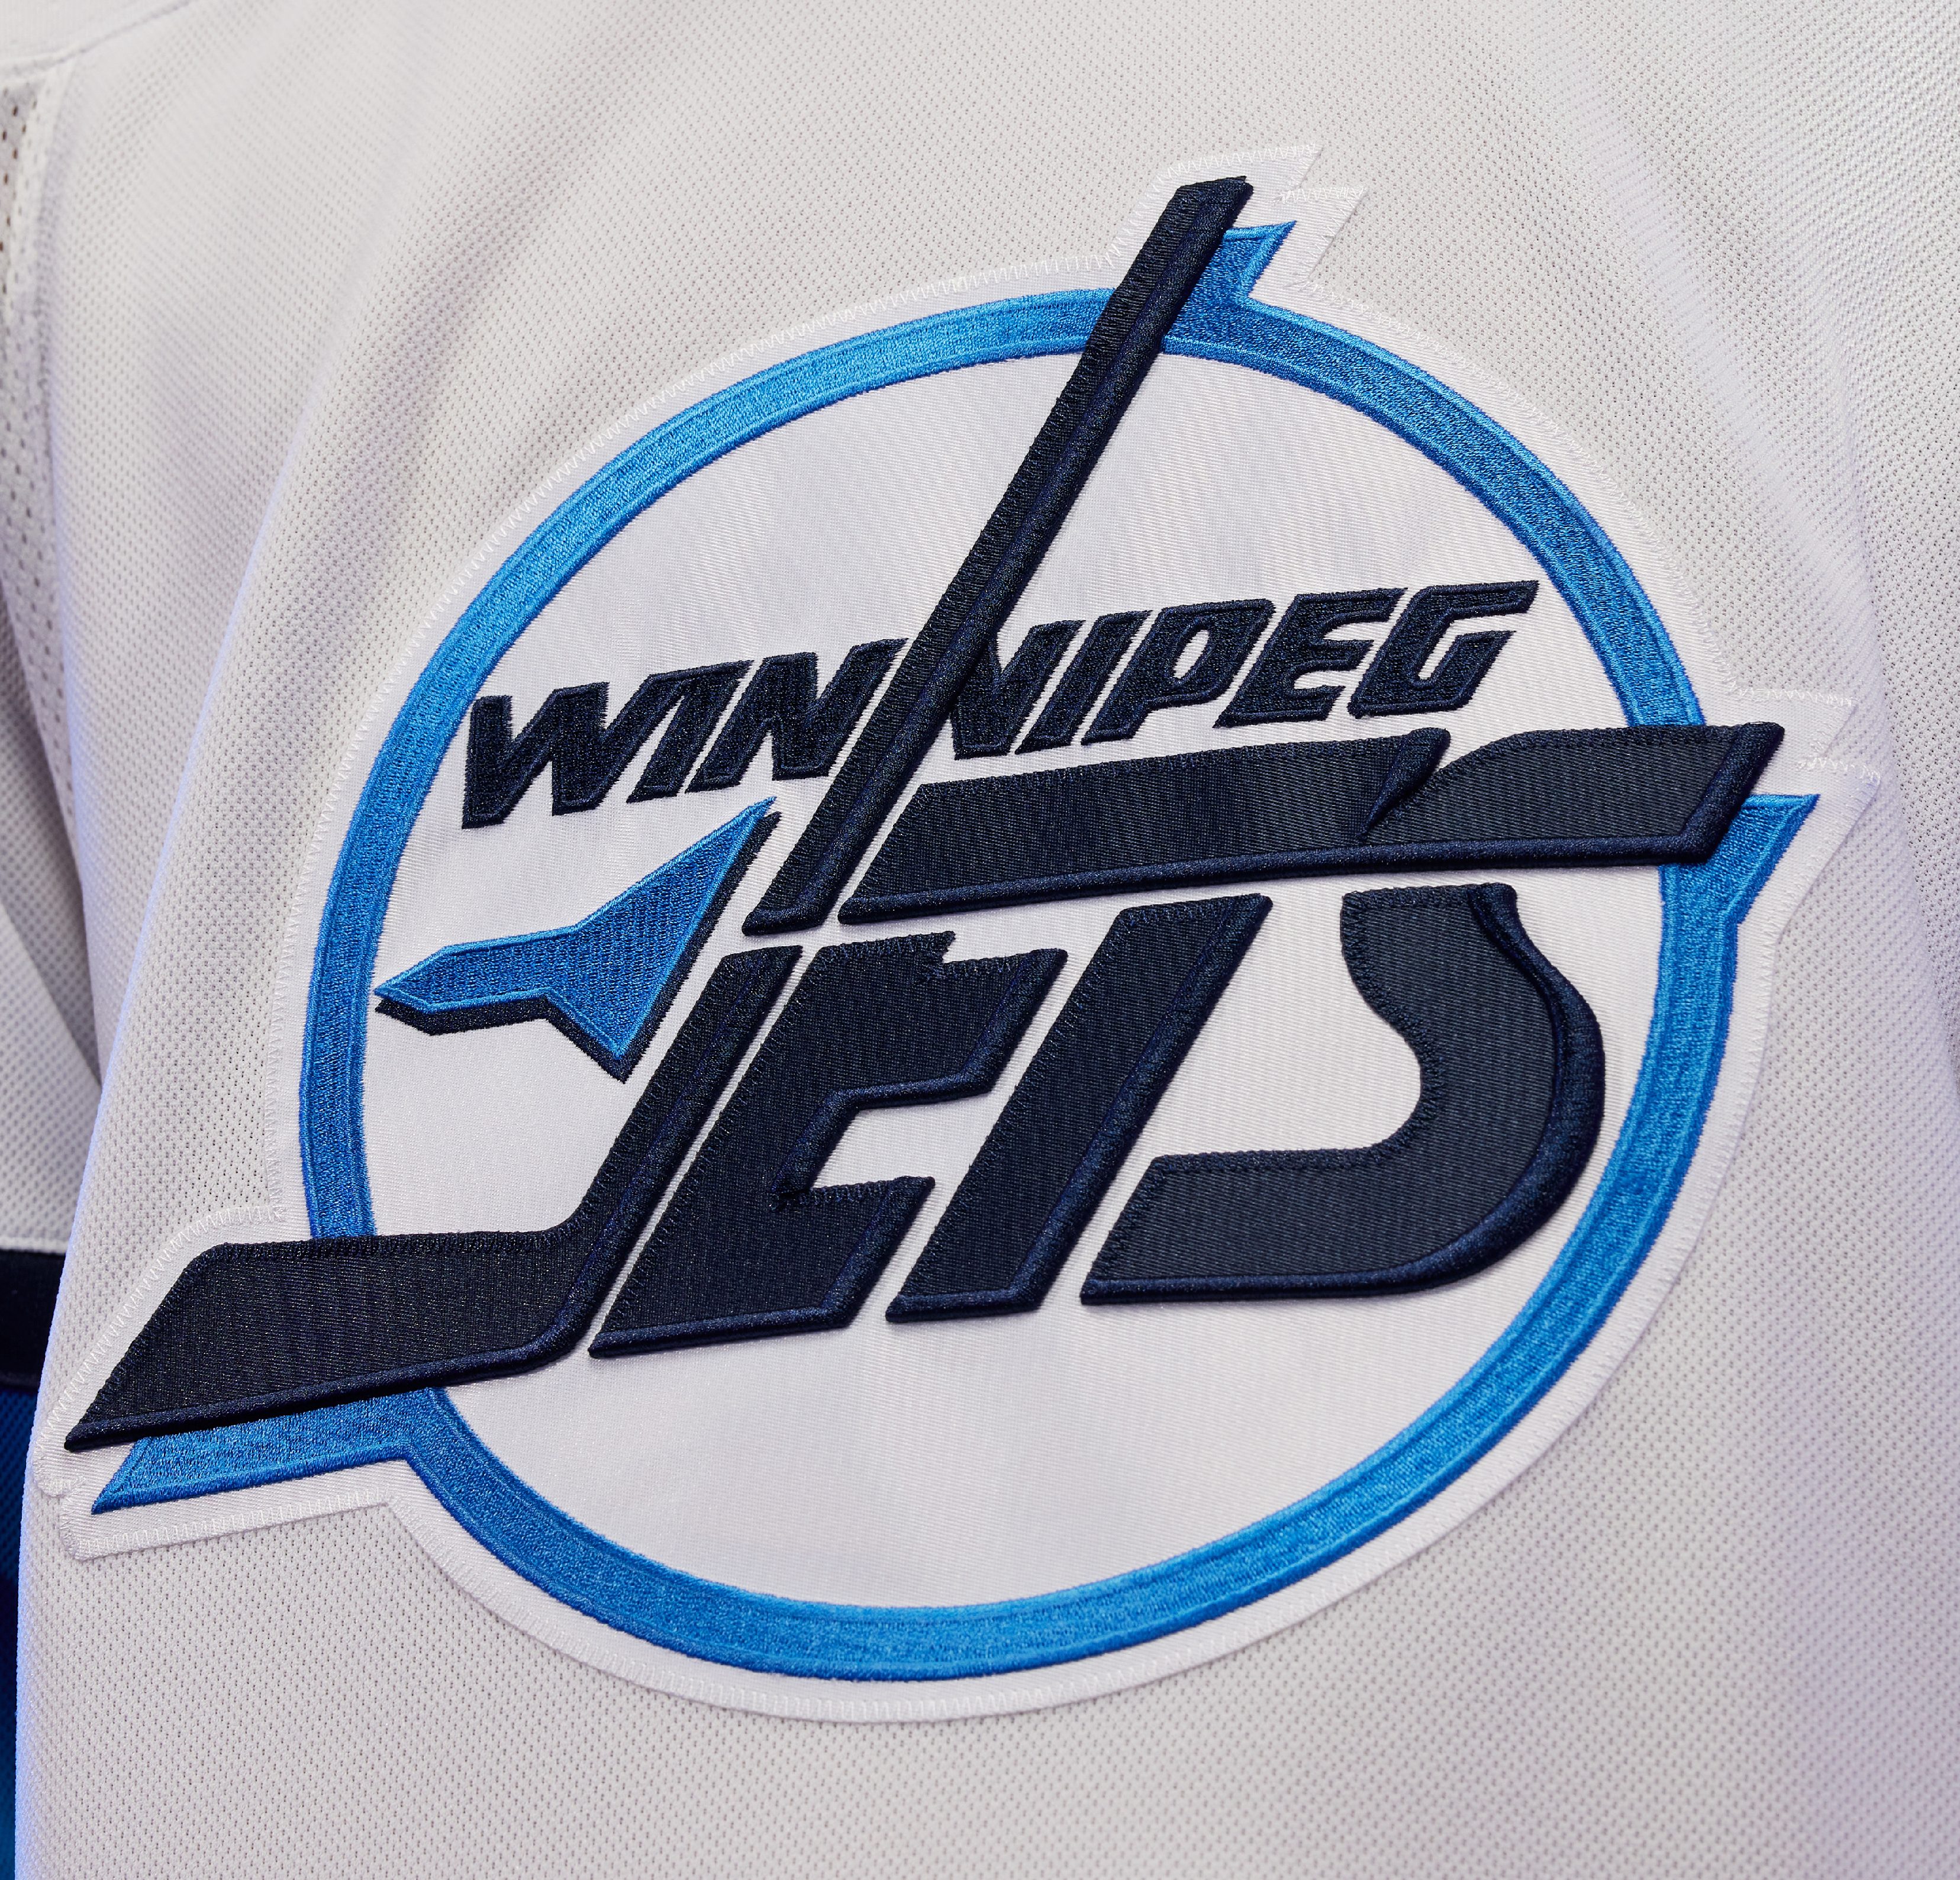 Winnipeg Jets unveil new jerseys